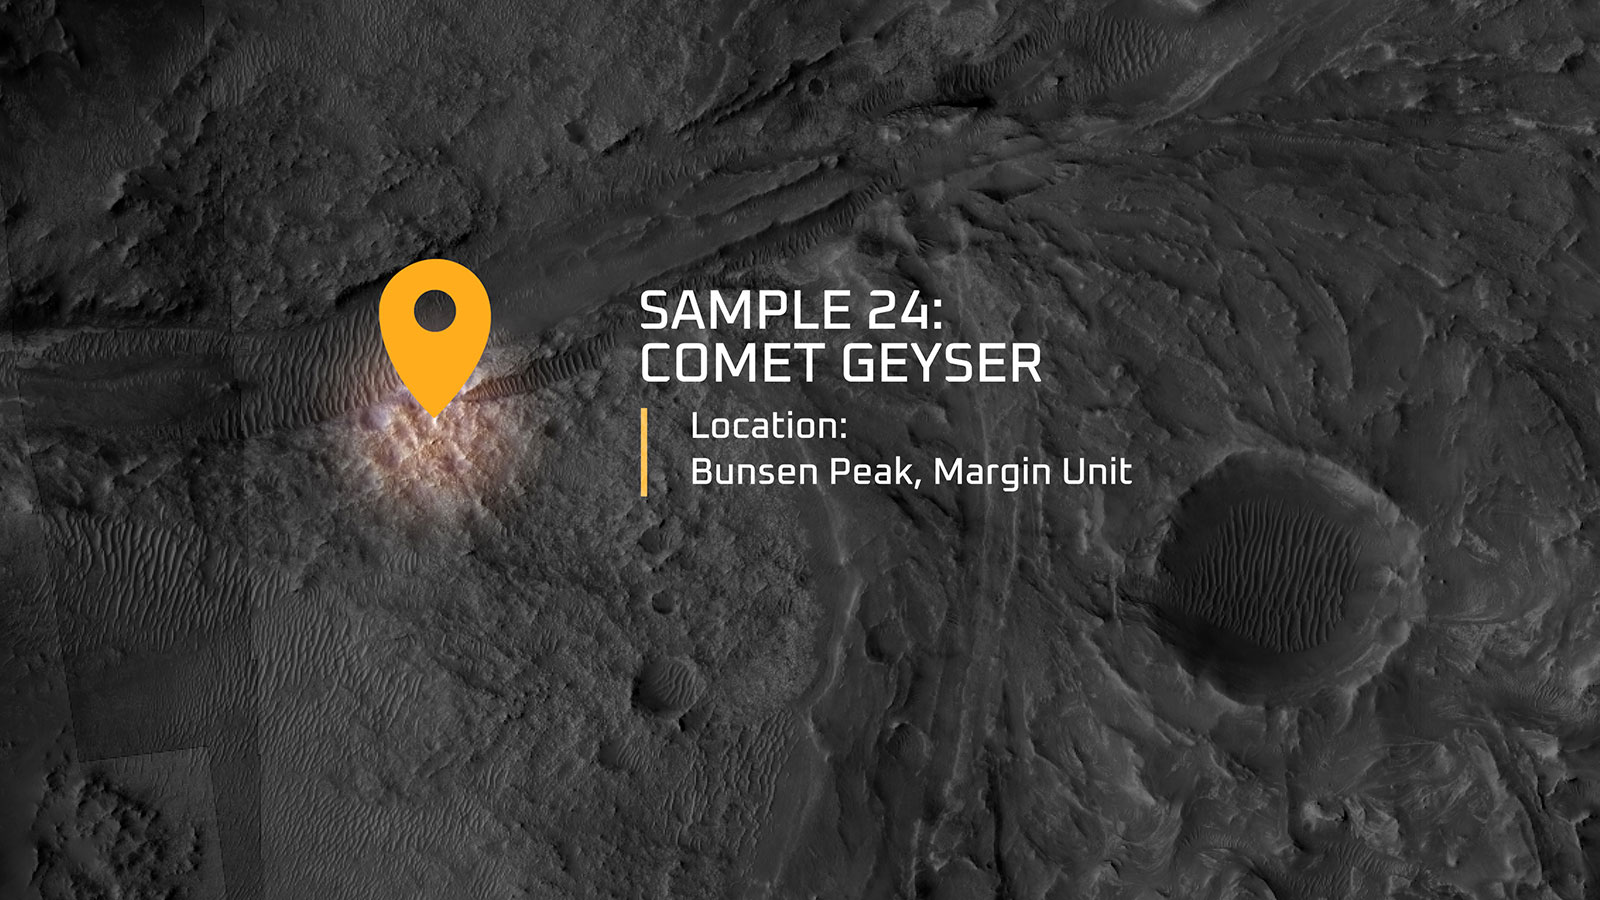 Watch video for Meet the Mars Samples: Comet Geyser (Sample 24)